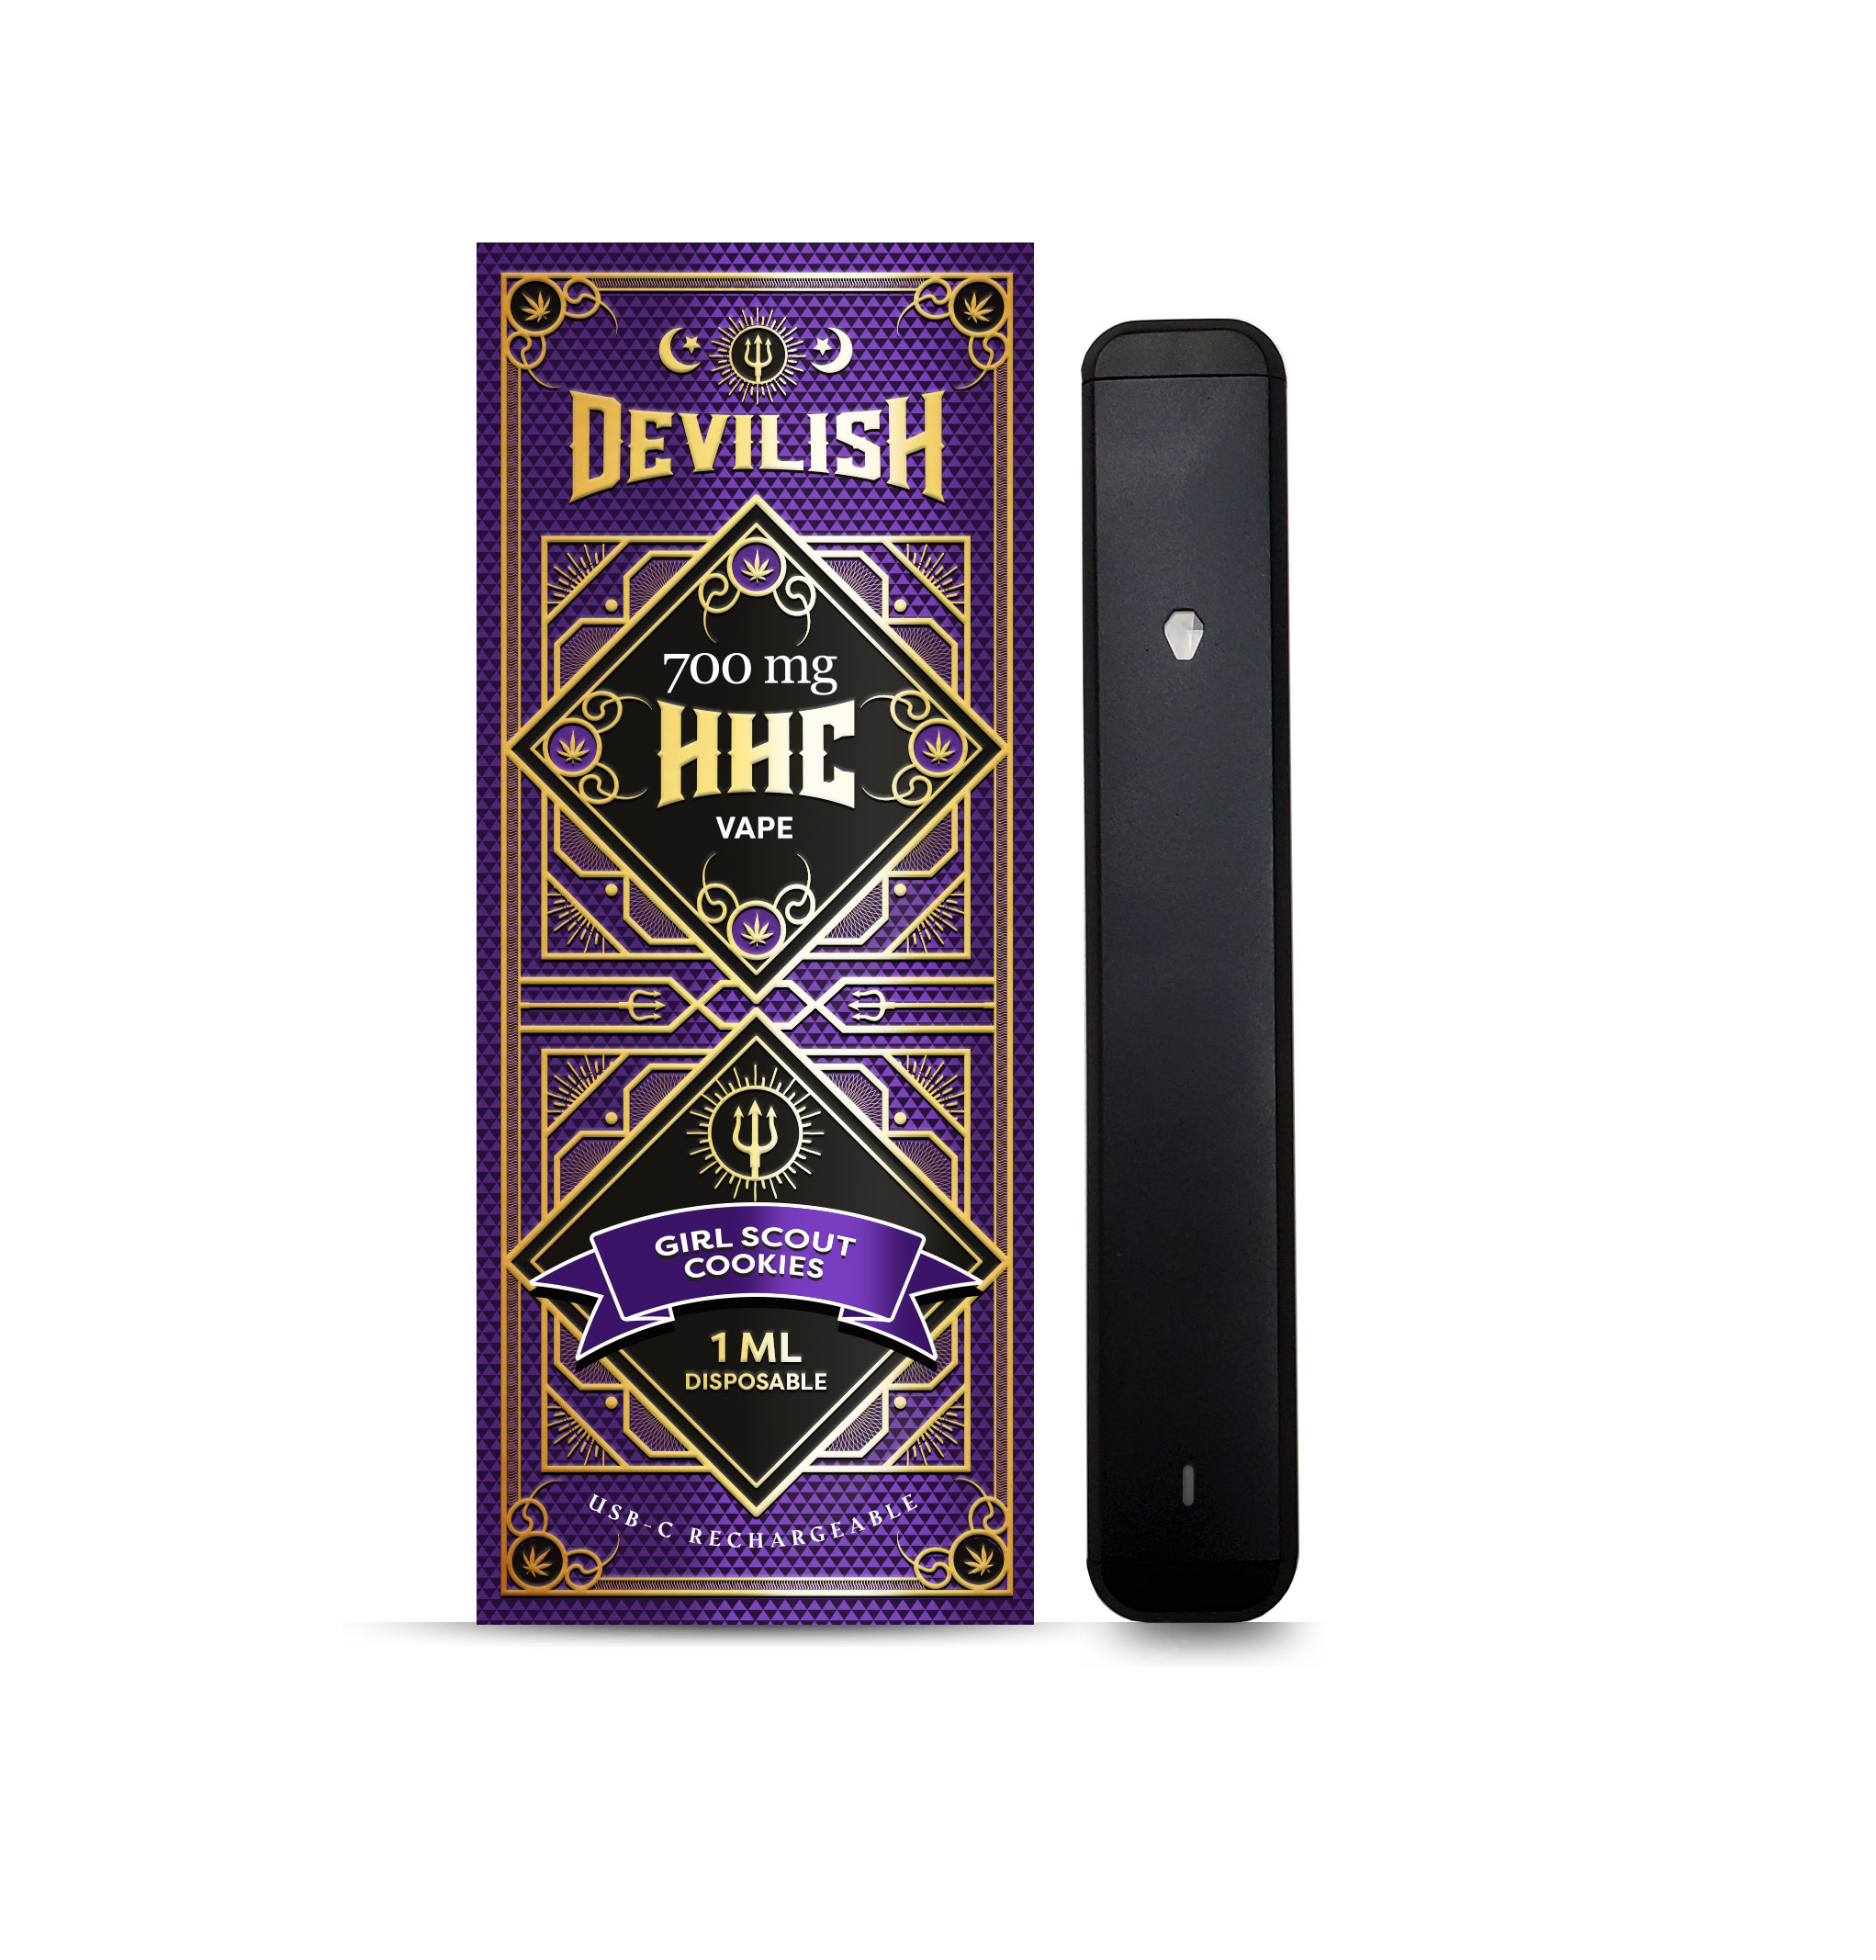 Devilish 700mg HHC Disposable Vape Pen, Girl Scout Cookies